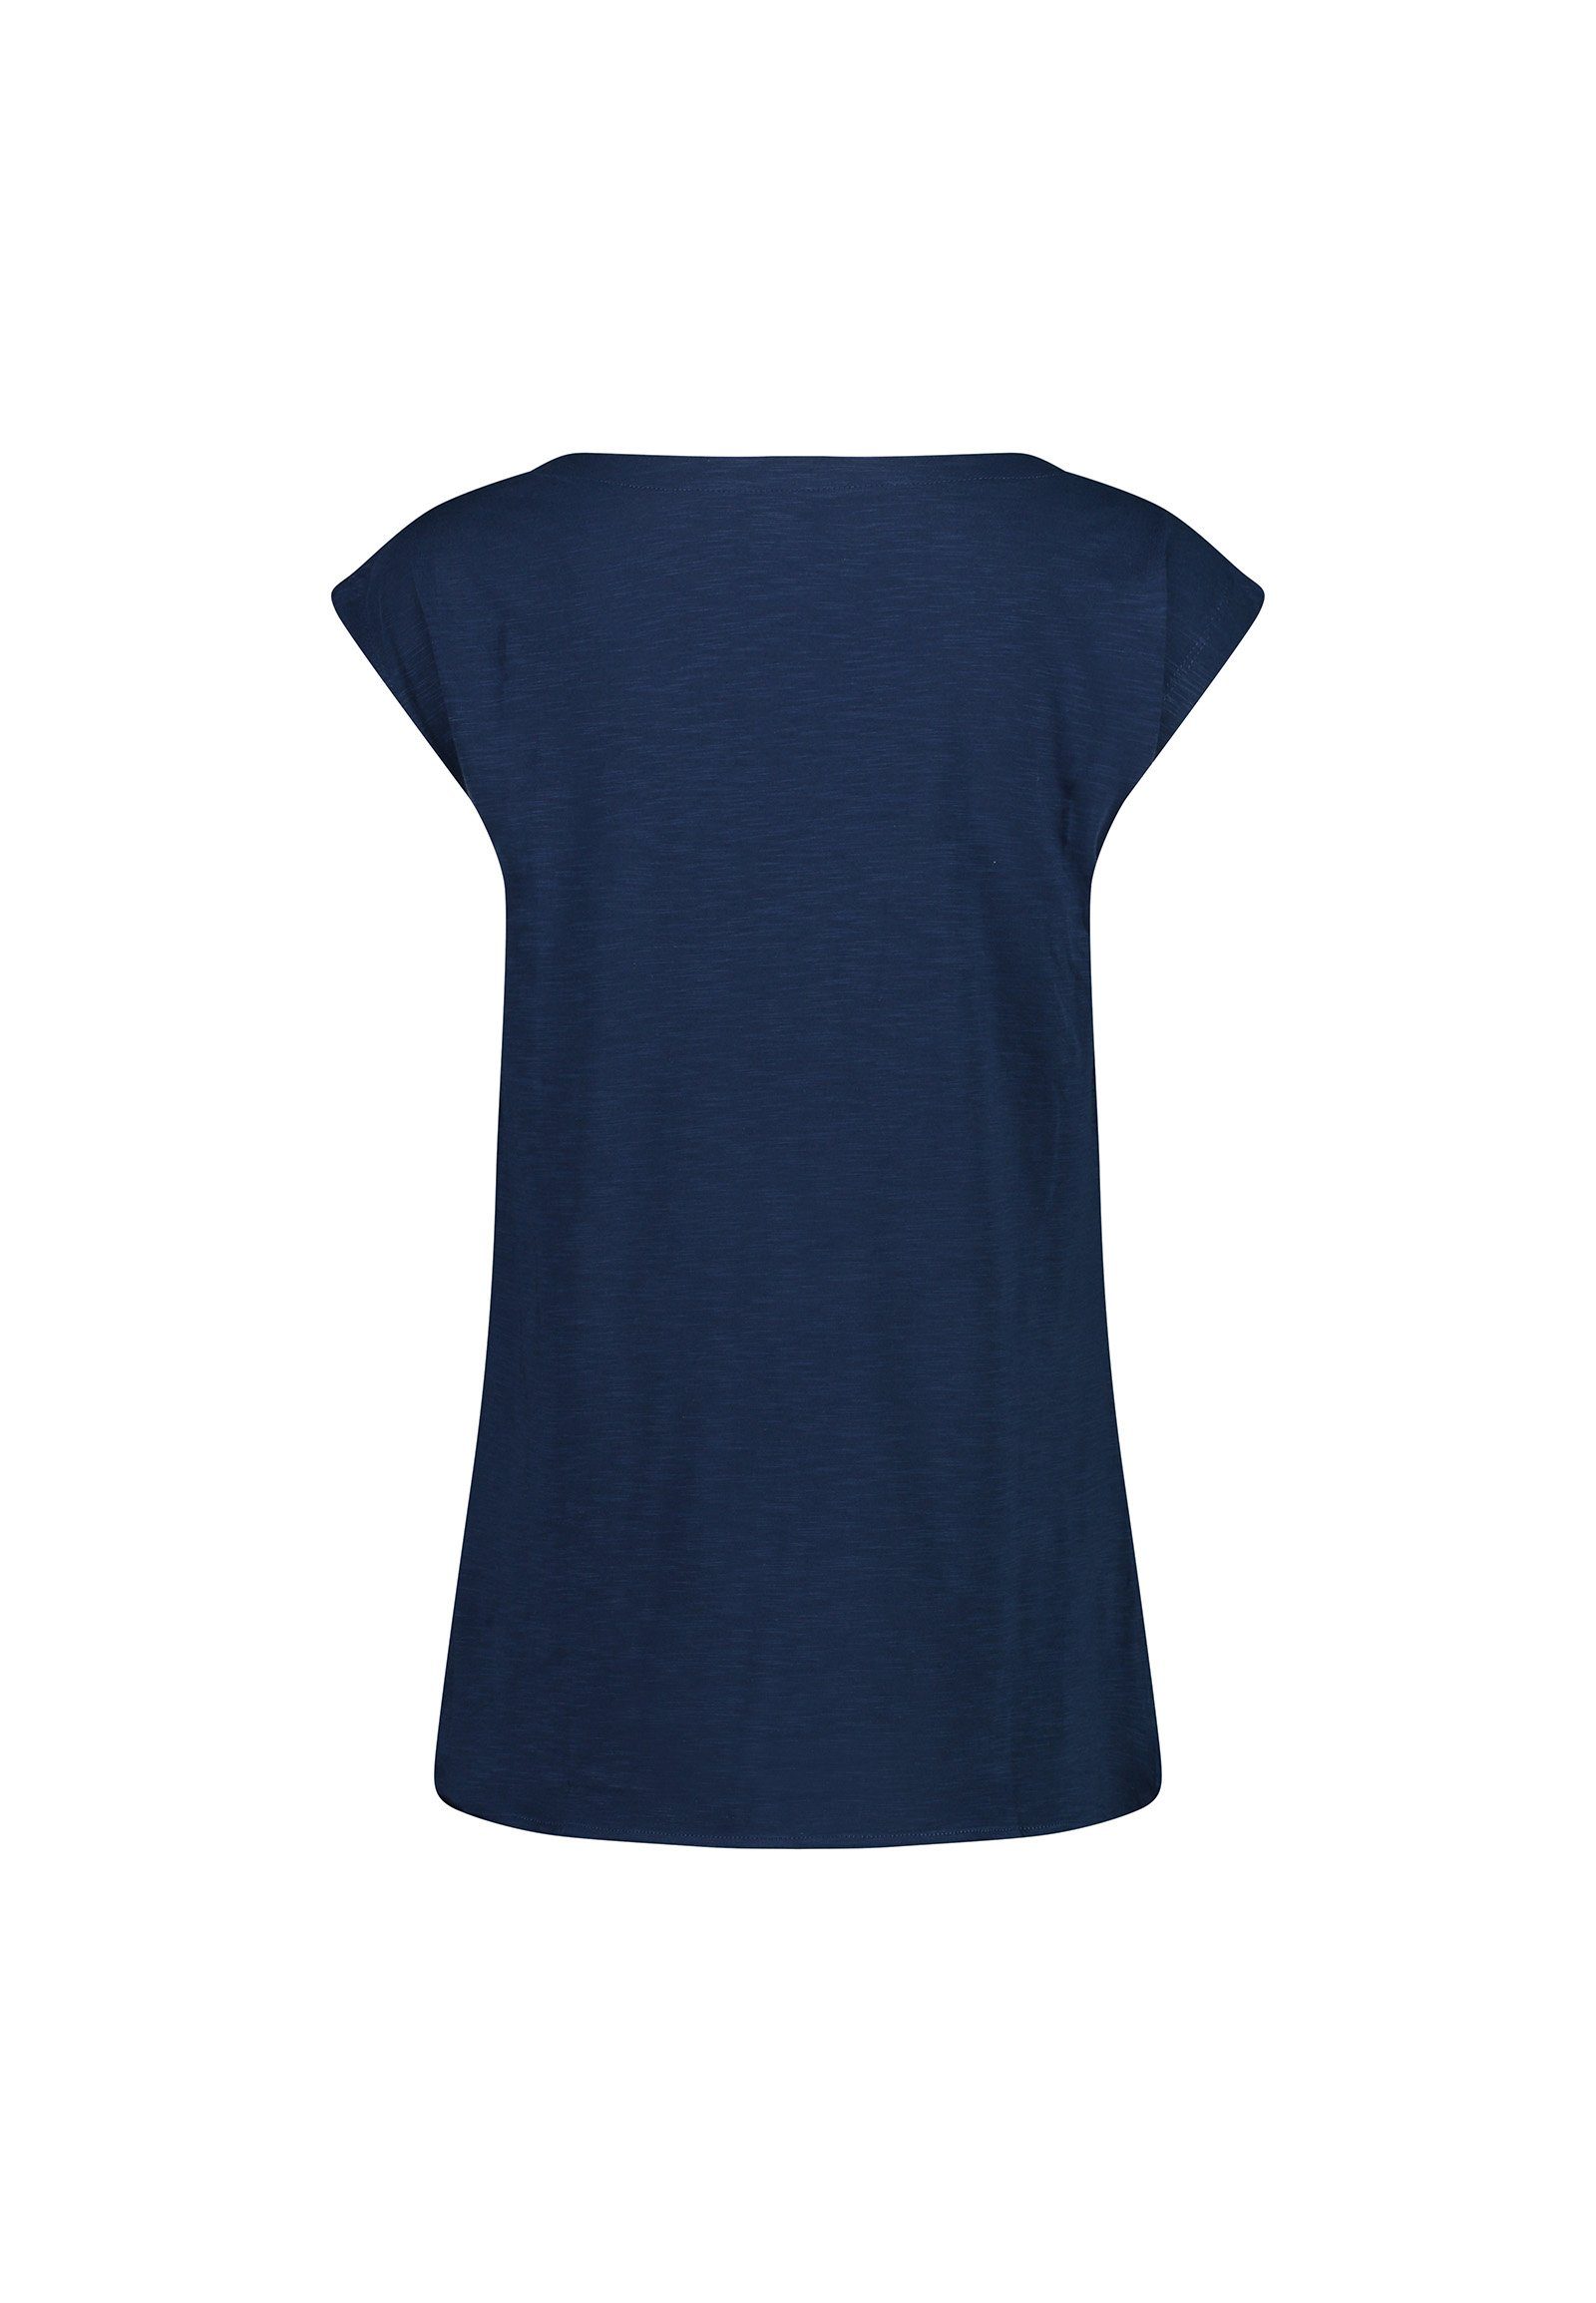 Damen Laufshirt 32D8 CMP aus Bio-Baumwolle 100% CMP Maxi-T-Shirt dunkelblau